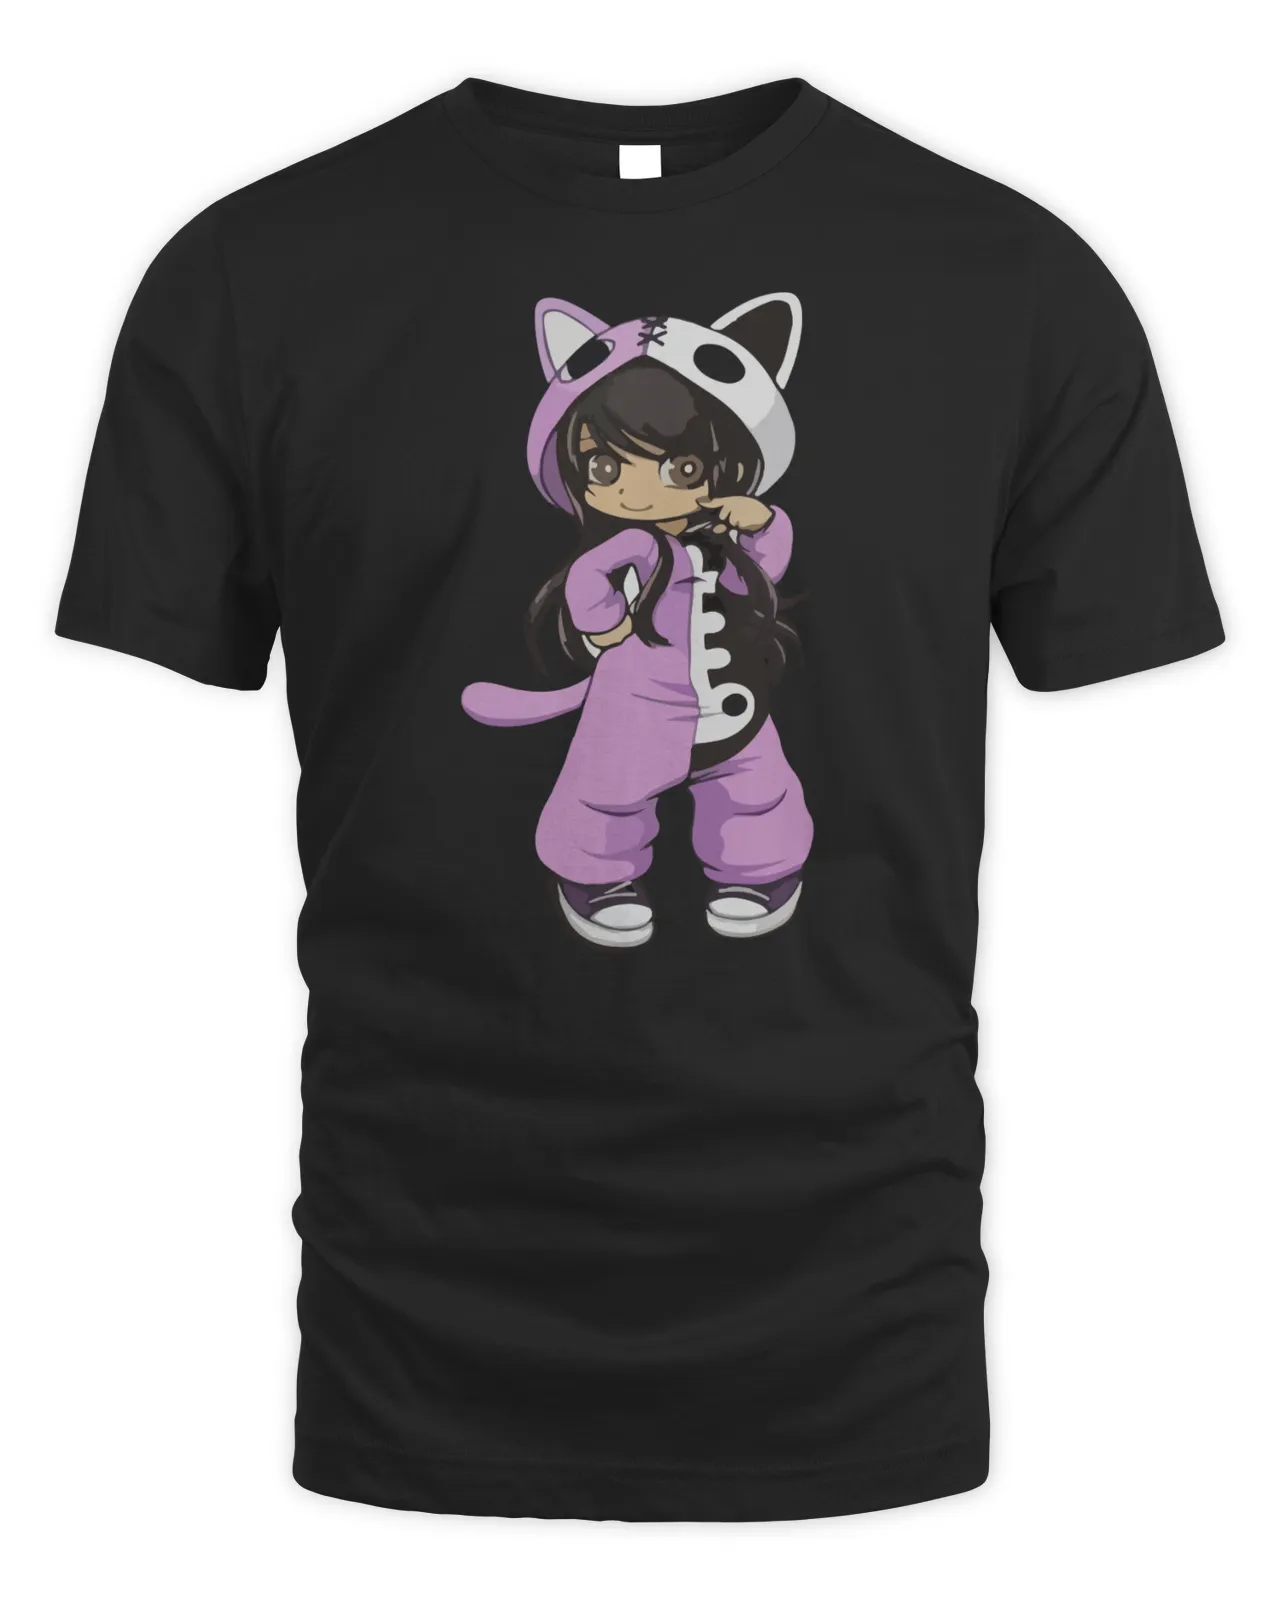 NEW Aphmau As a Cat Black T-Shirt S-5XL 